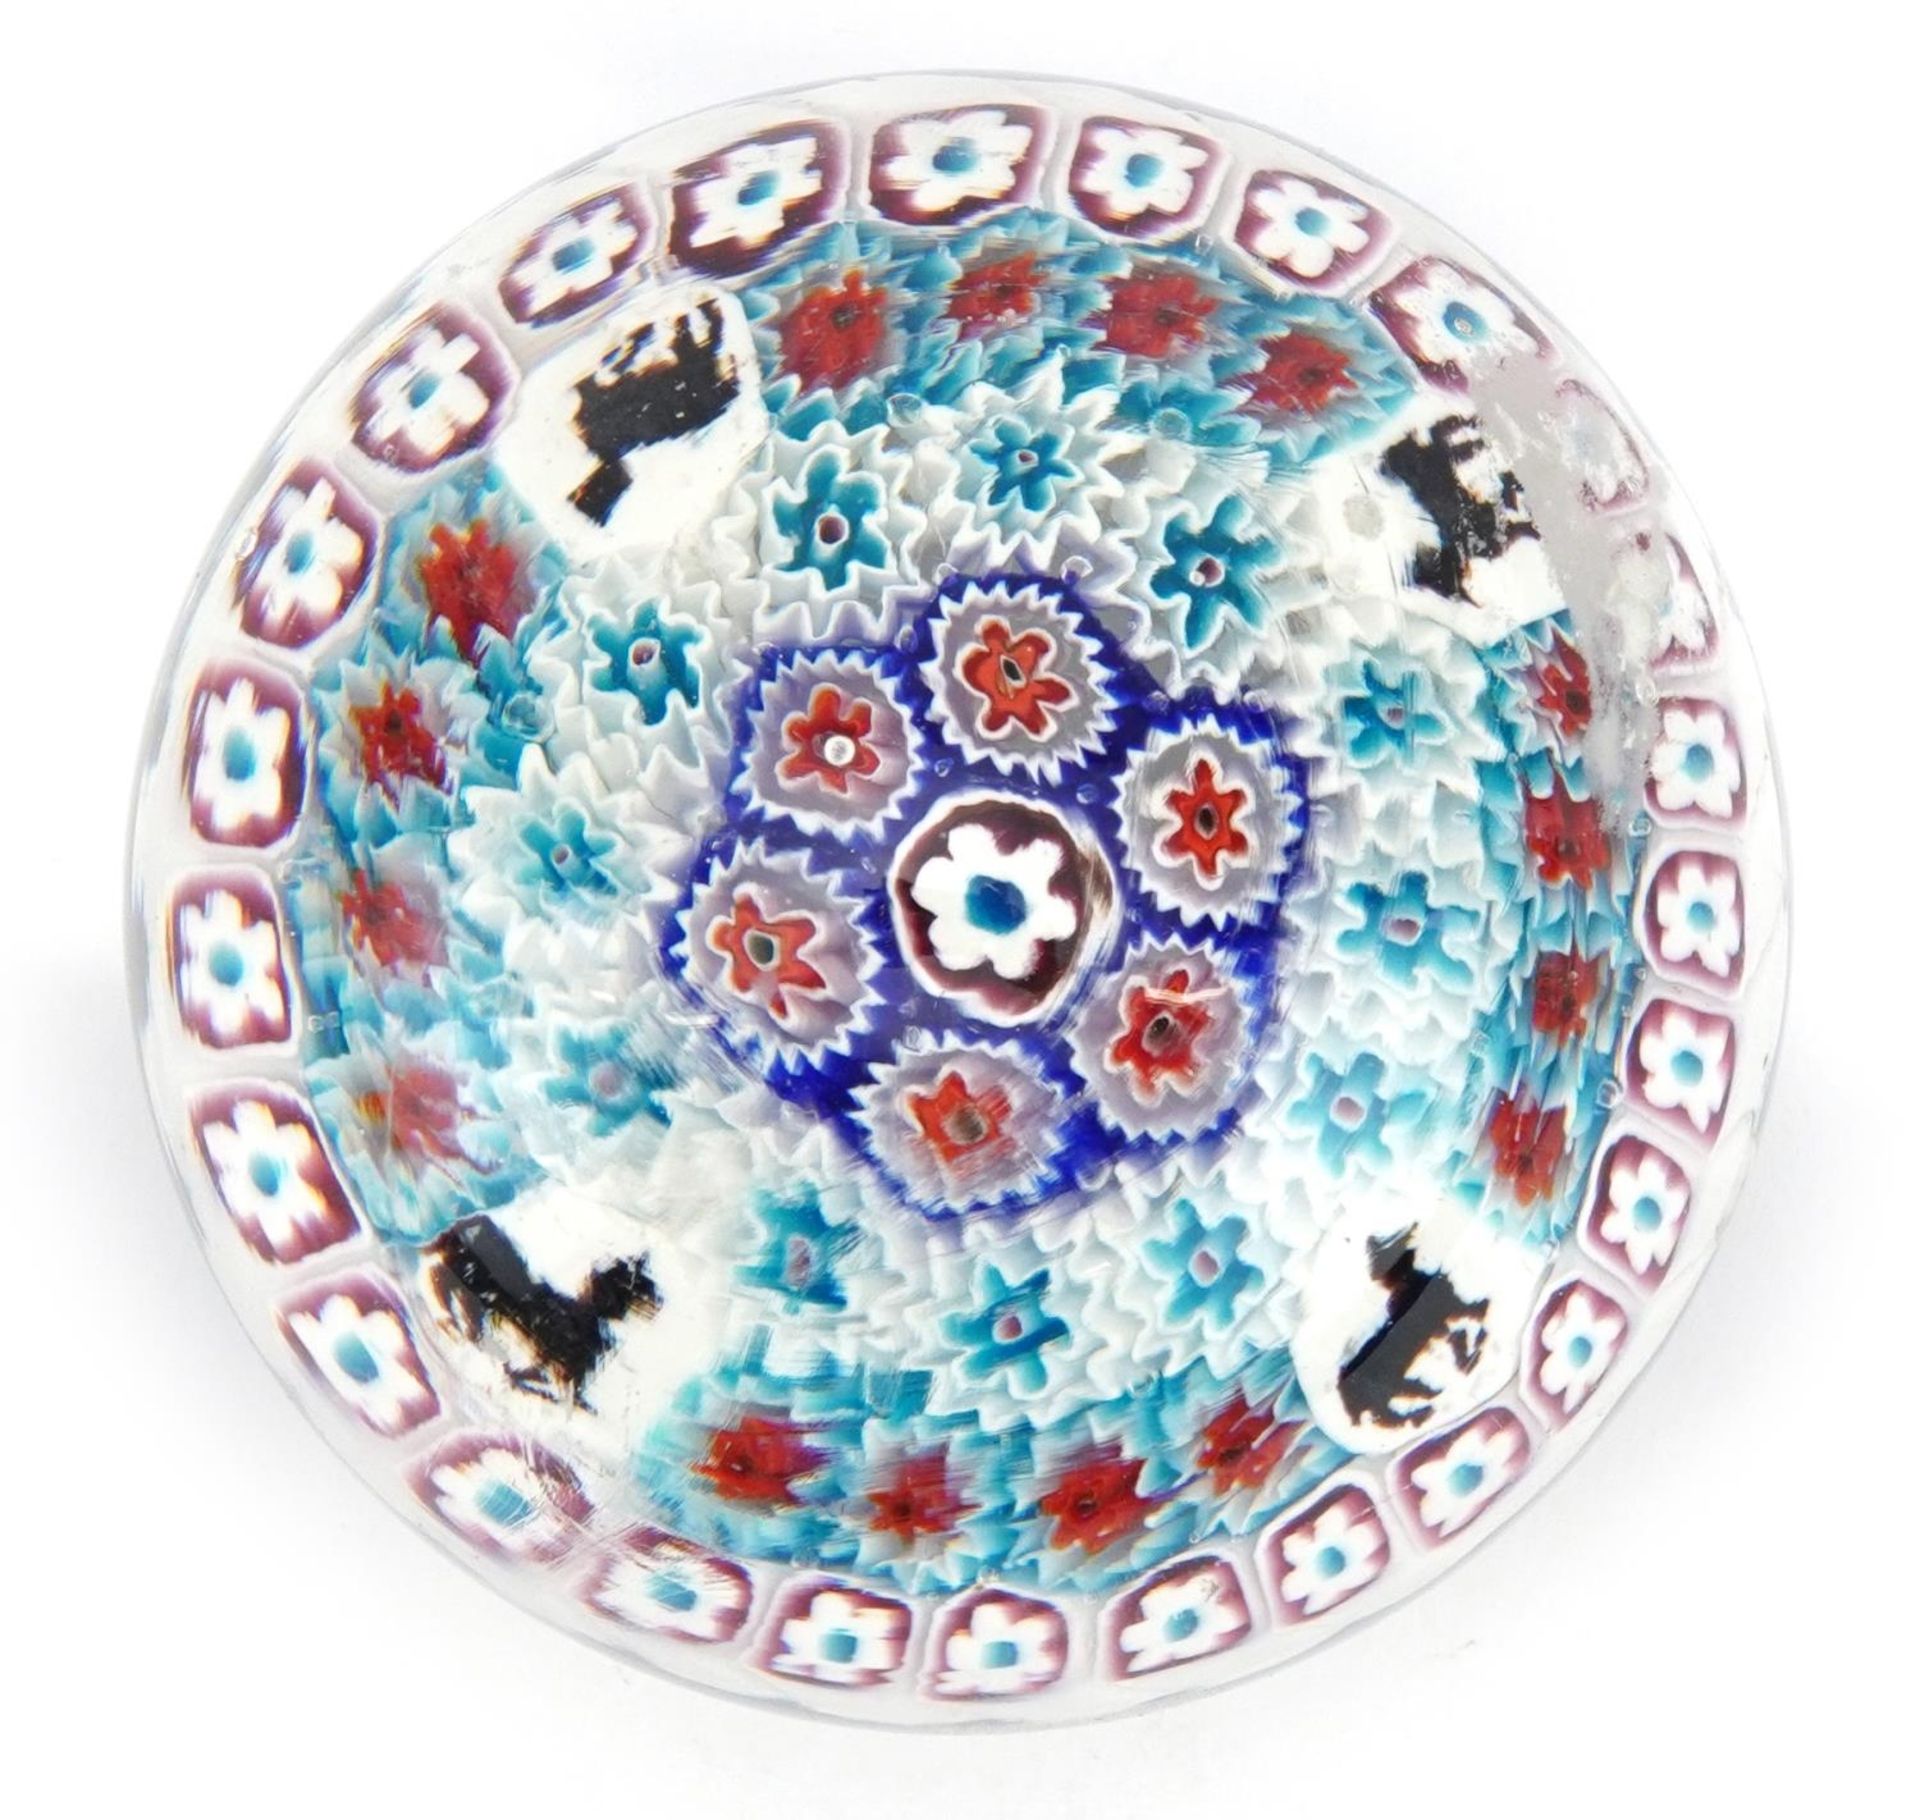 Murano Fratelli Toso millefiori glass paperweight, 8cm in diameter